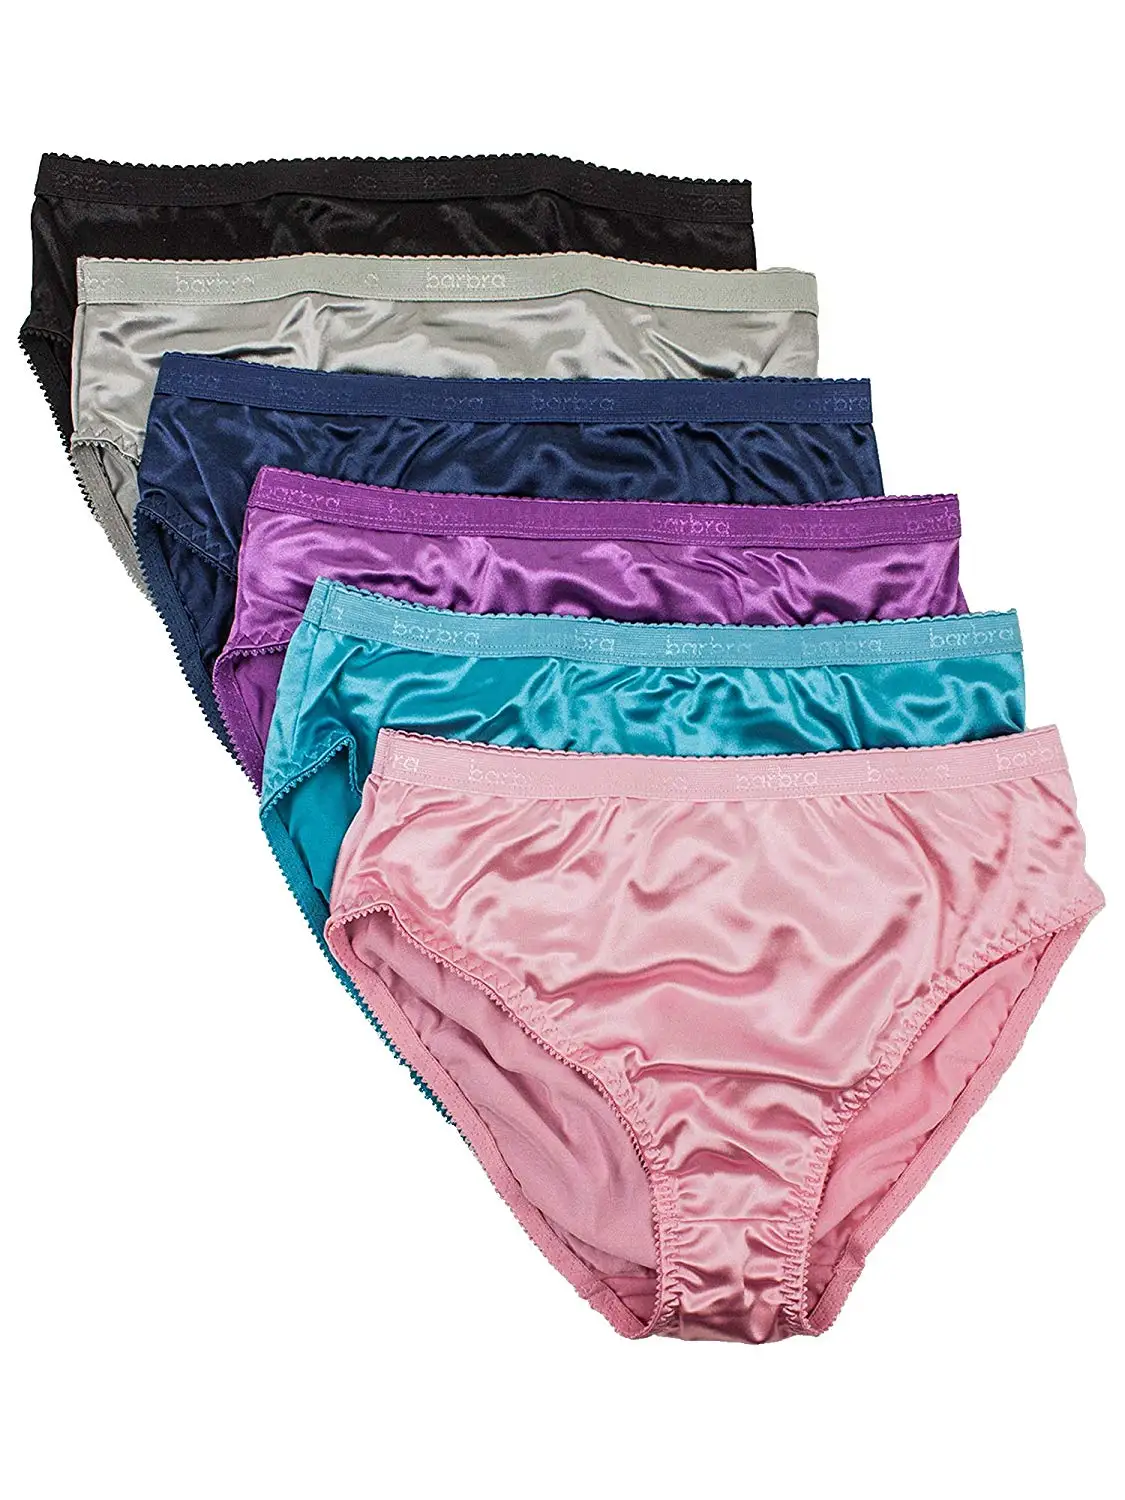 Cheap Bikini Panties, find Bikini Panties deals on line at Alibaba.com